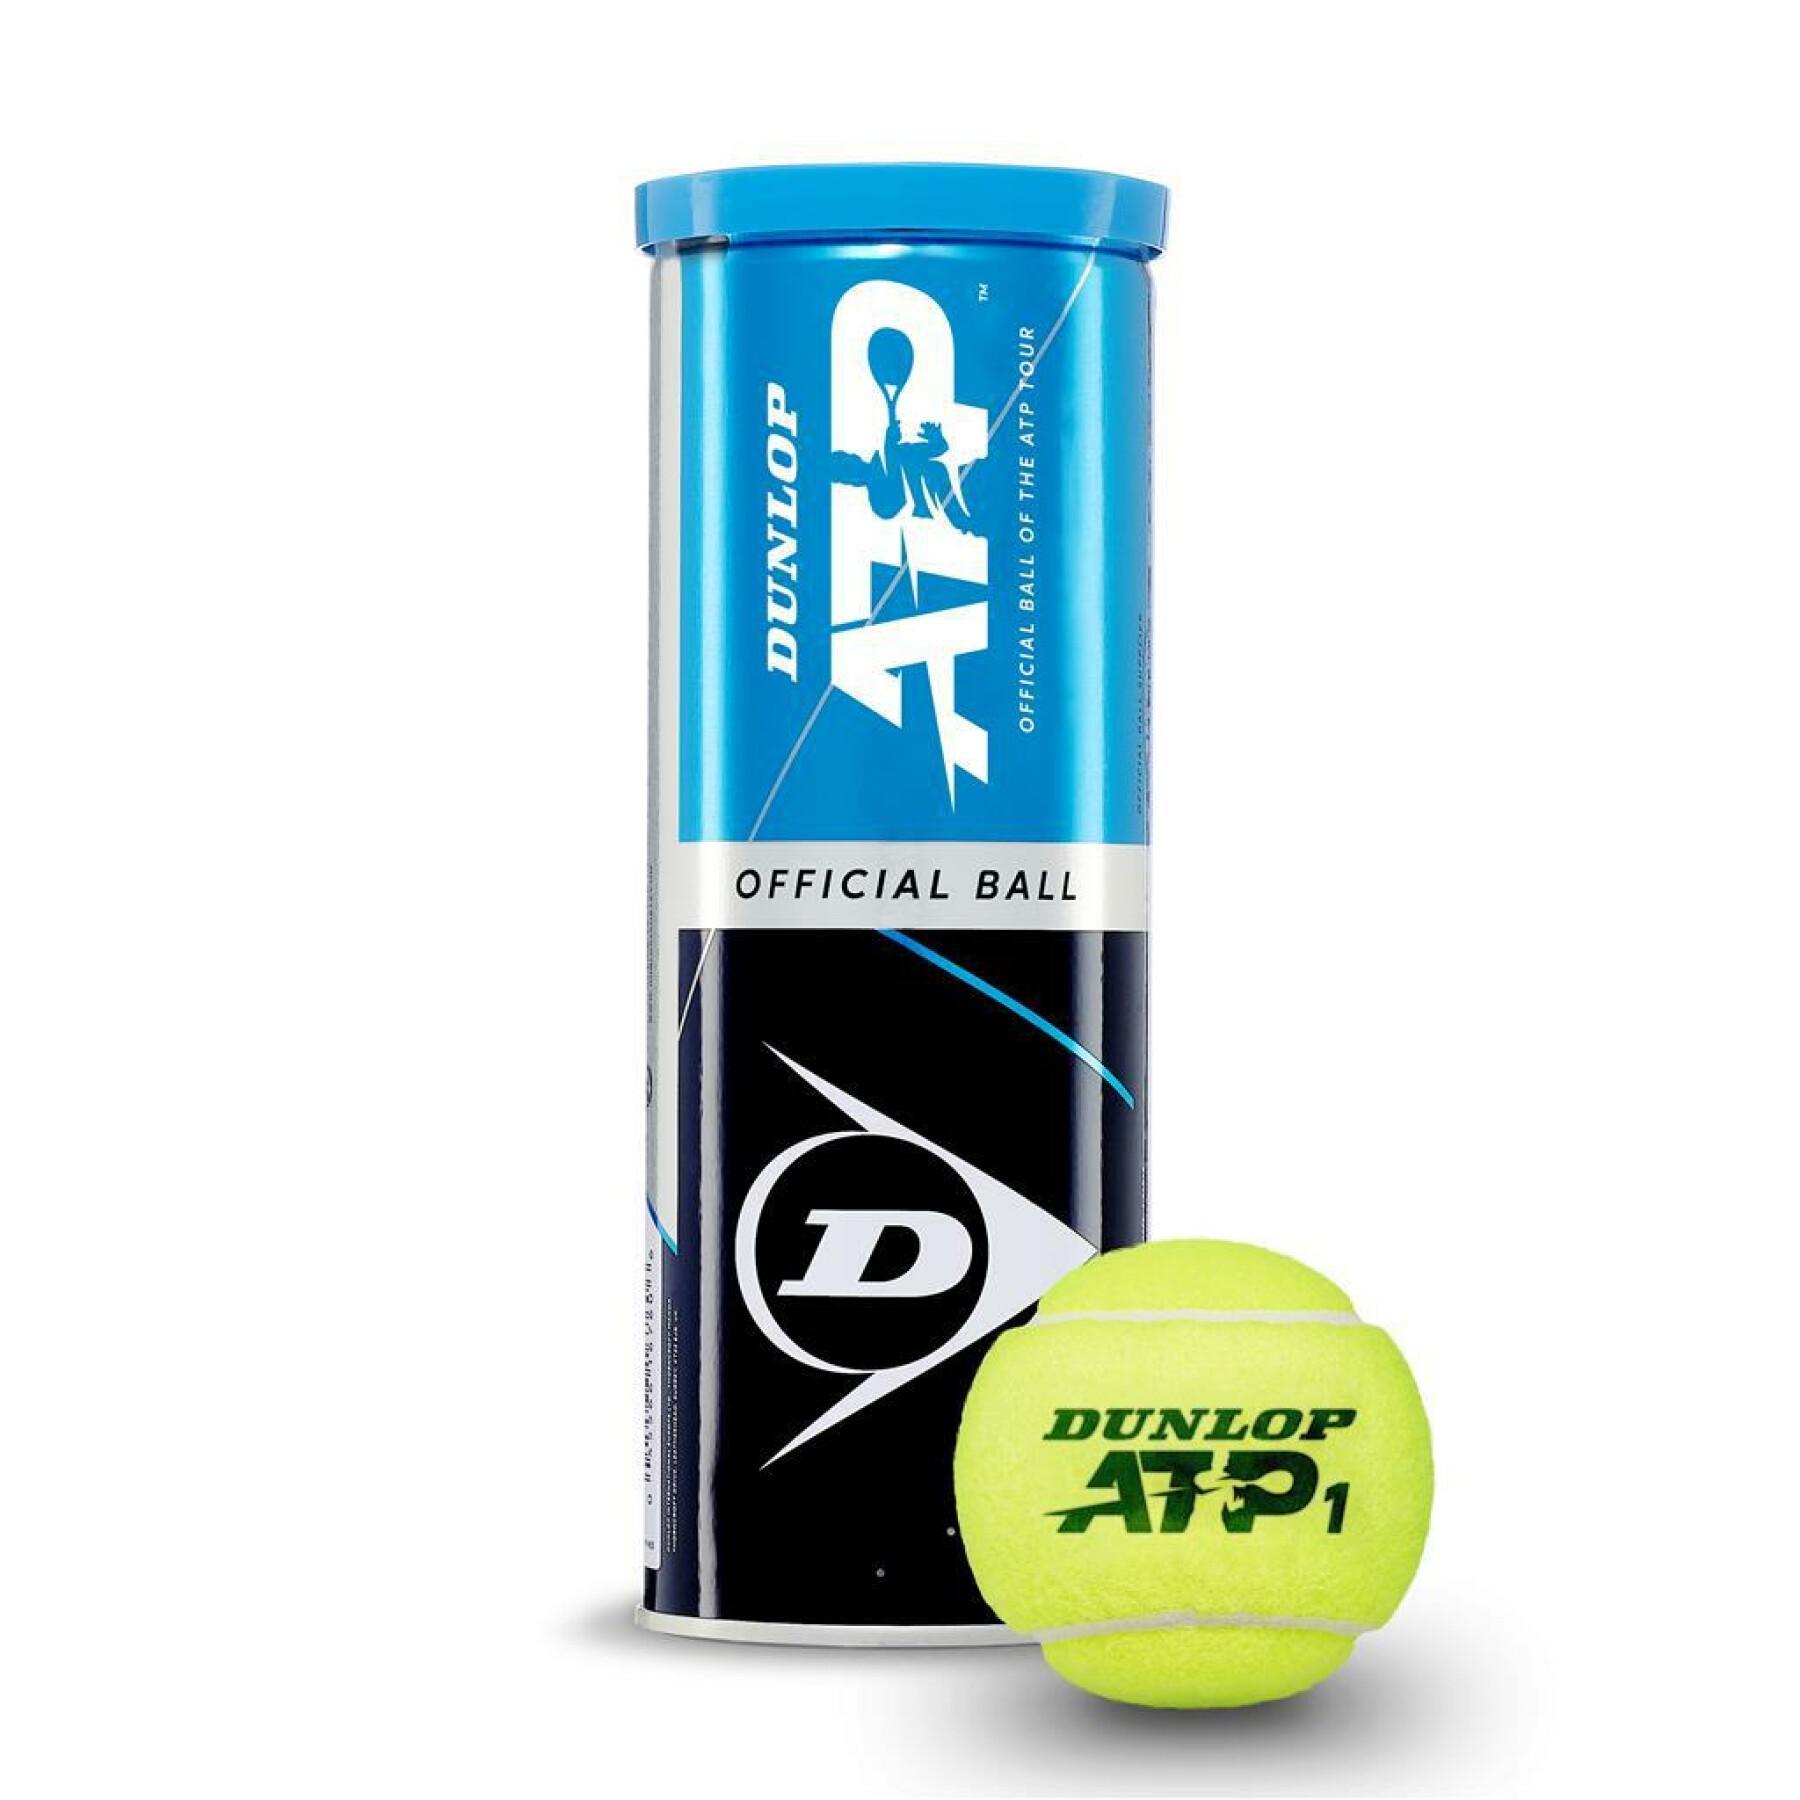 Set of 3 tennis balls Dunlop atp